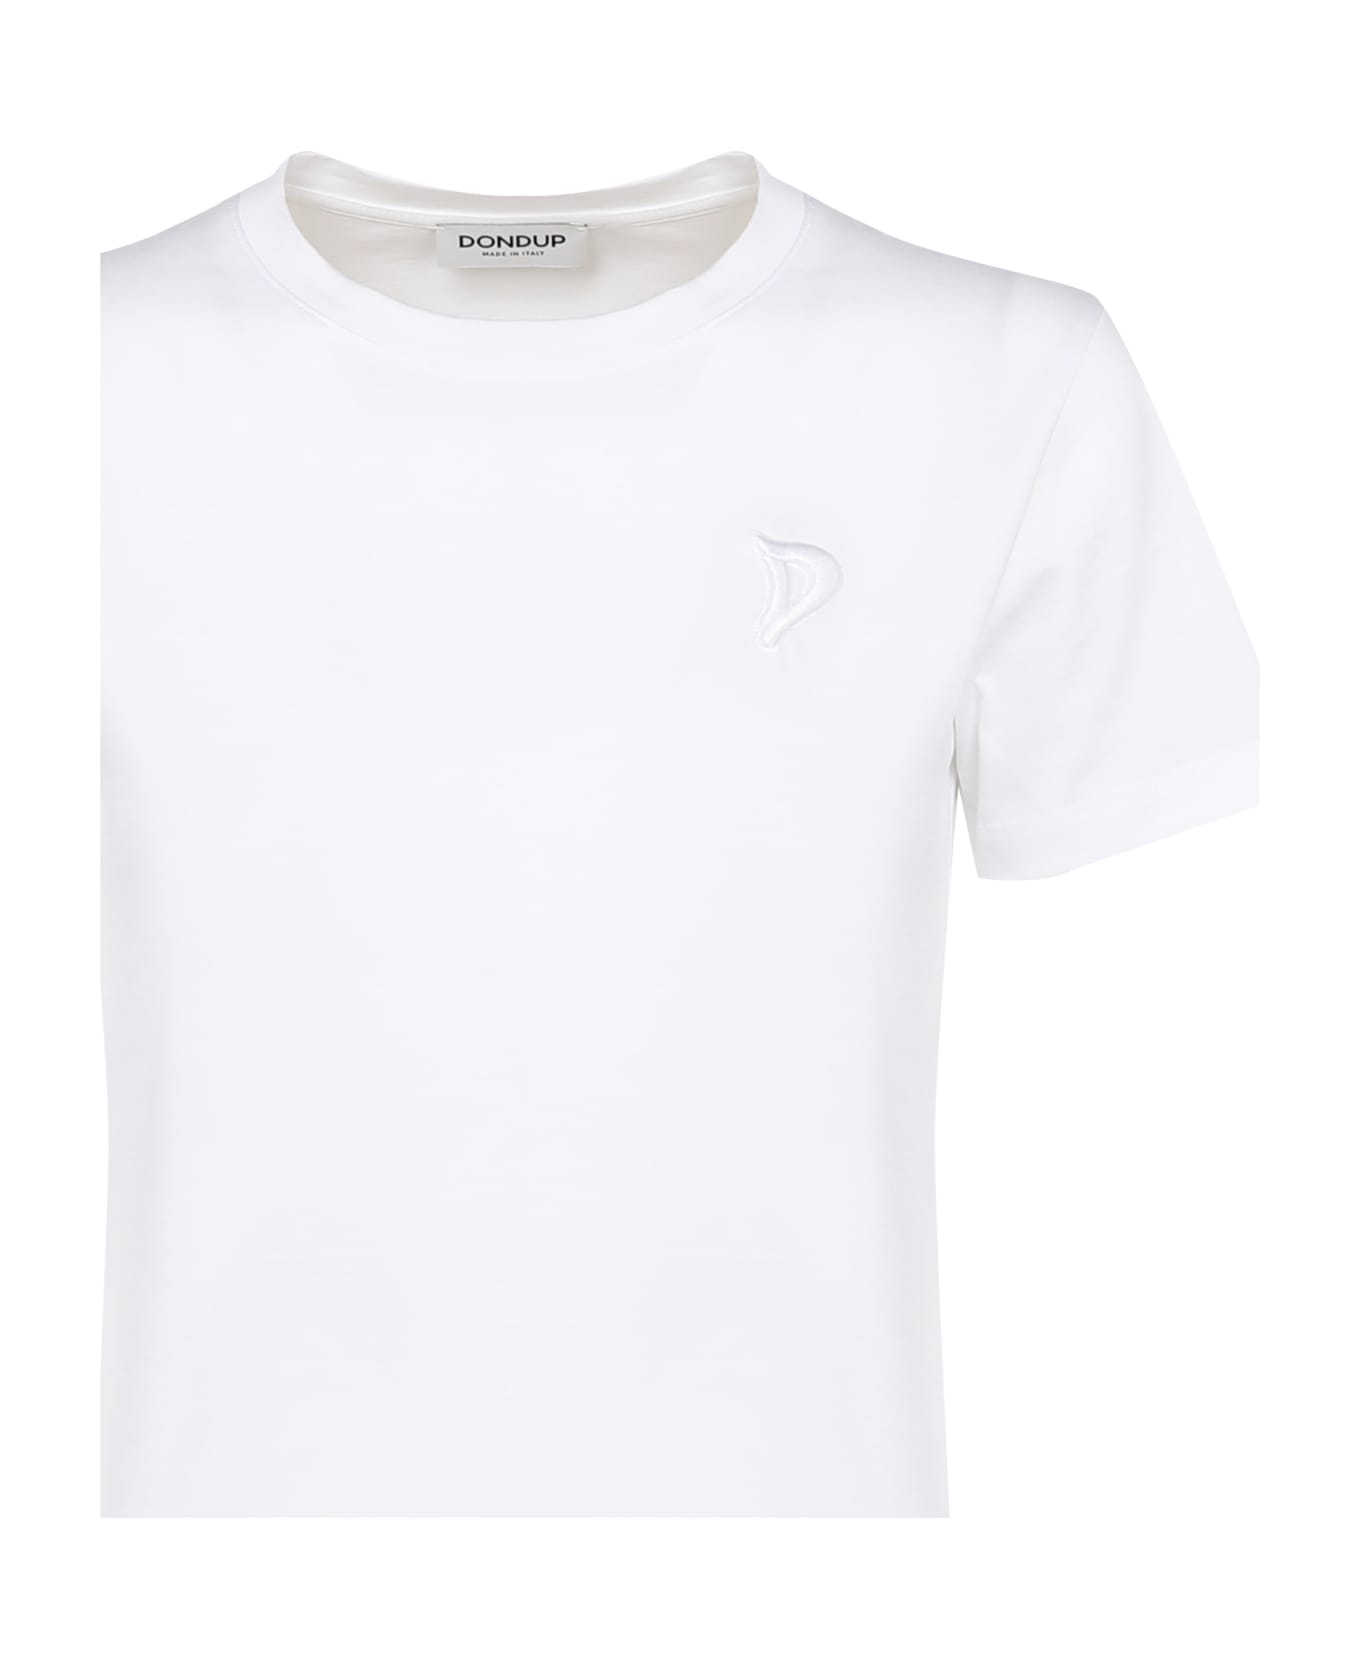 Dondup T-shirt Tシャツ